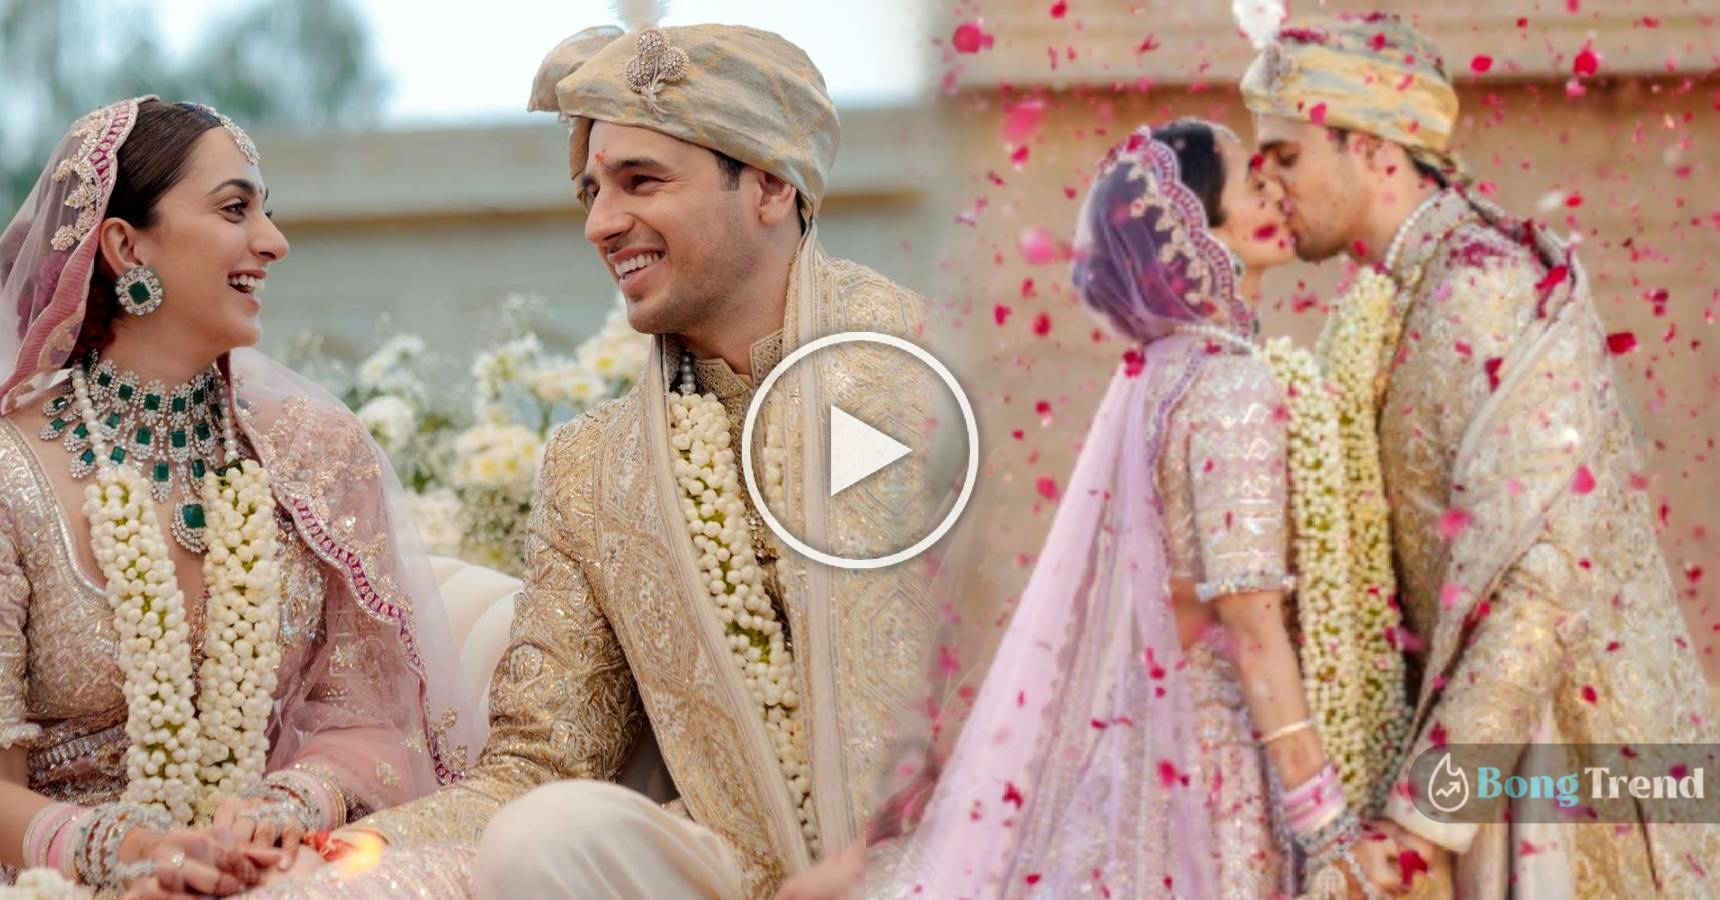 Shershah couple Sidharth Malhotra Kiara Advani’s wedding video is out now